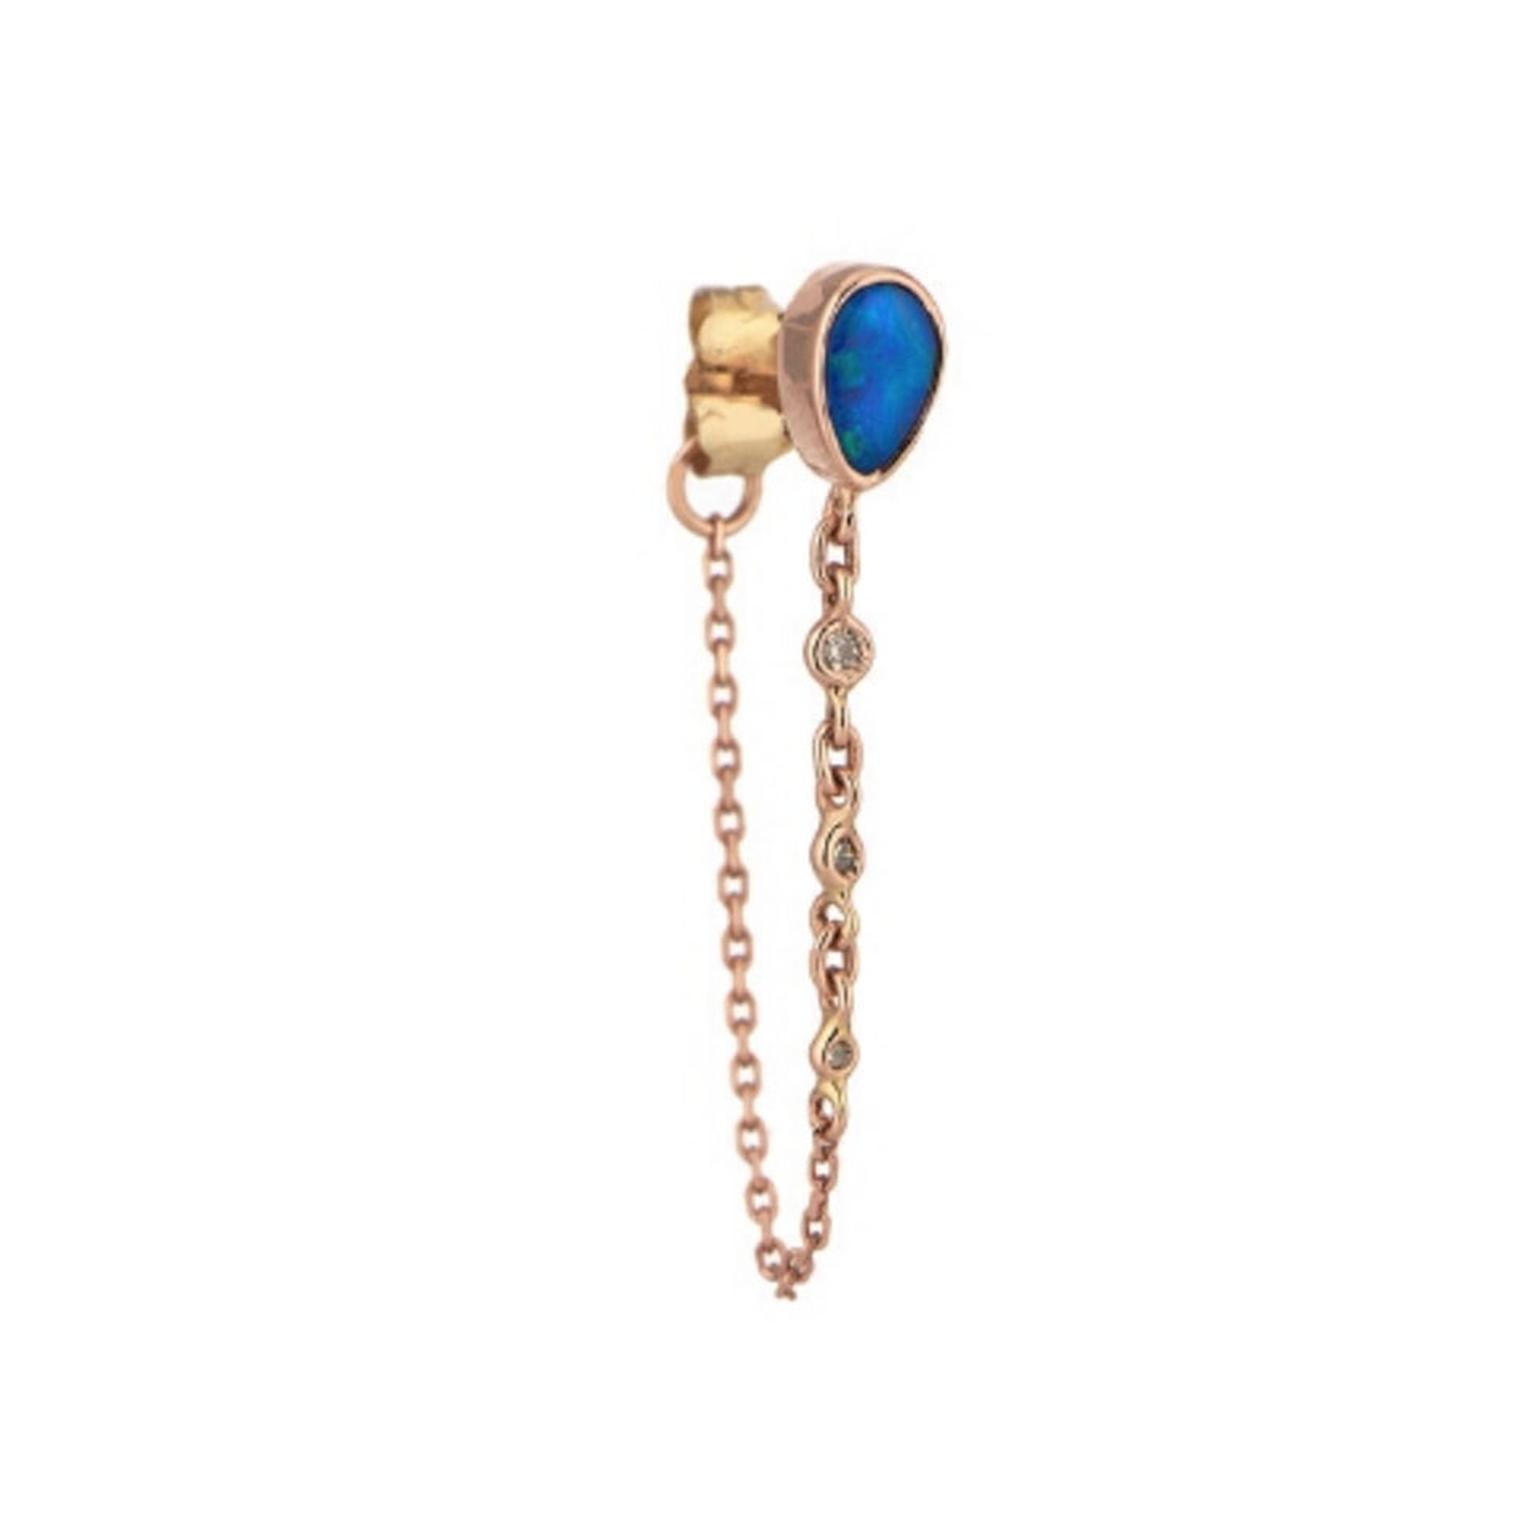 Celine d'Aoust single pearl, opal and diamond chain earring